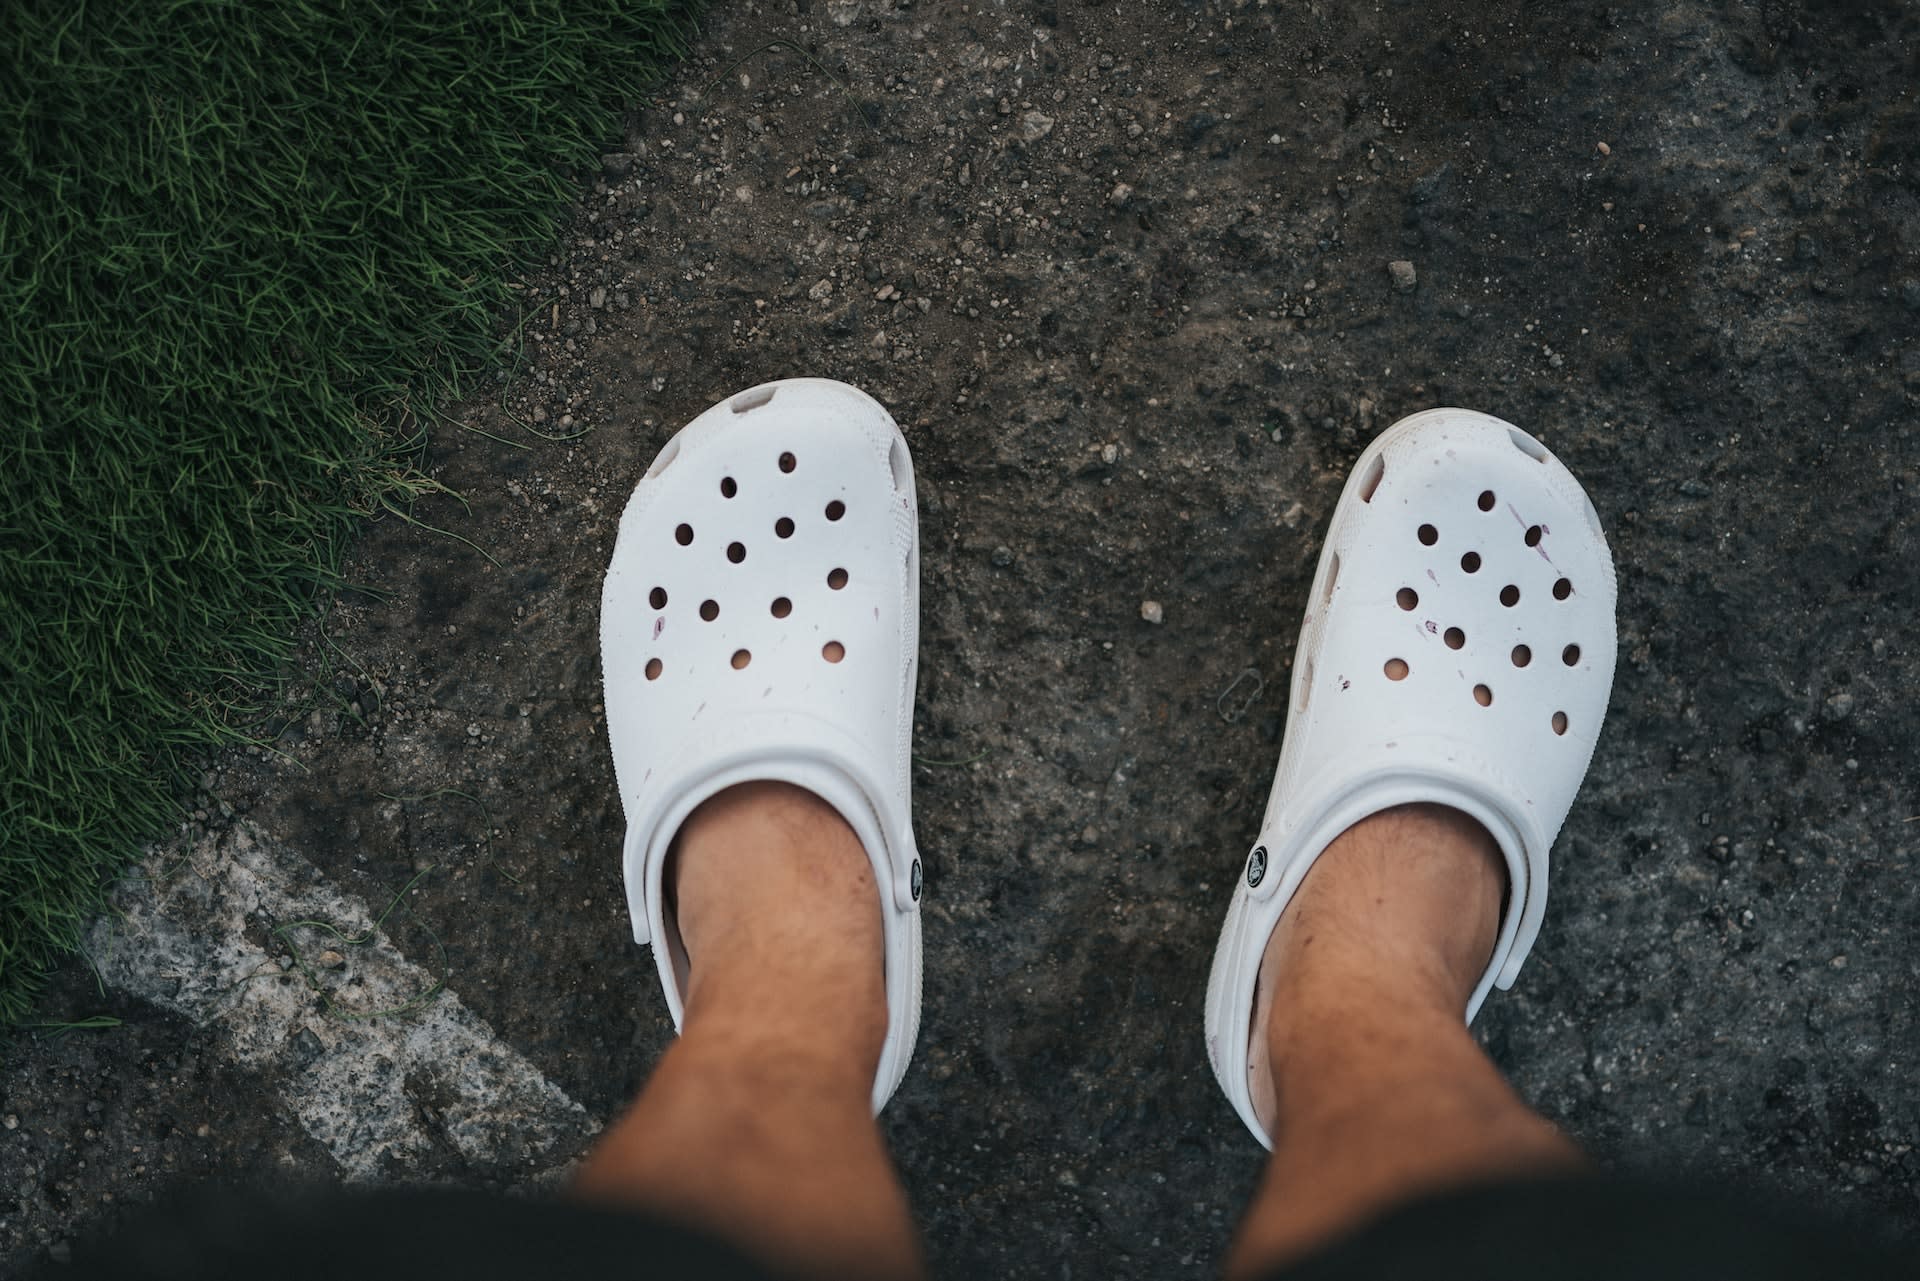 Person wearing white rubber crocs